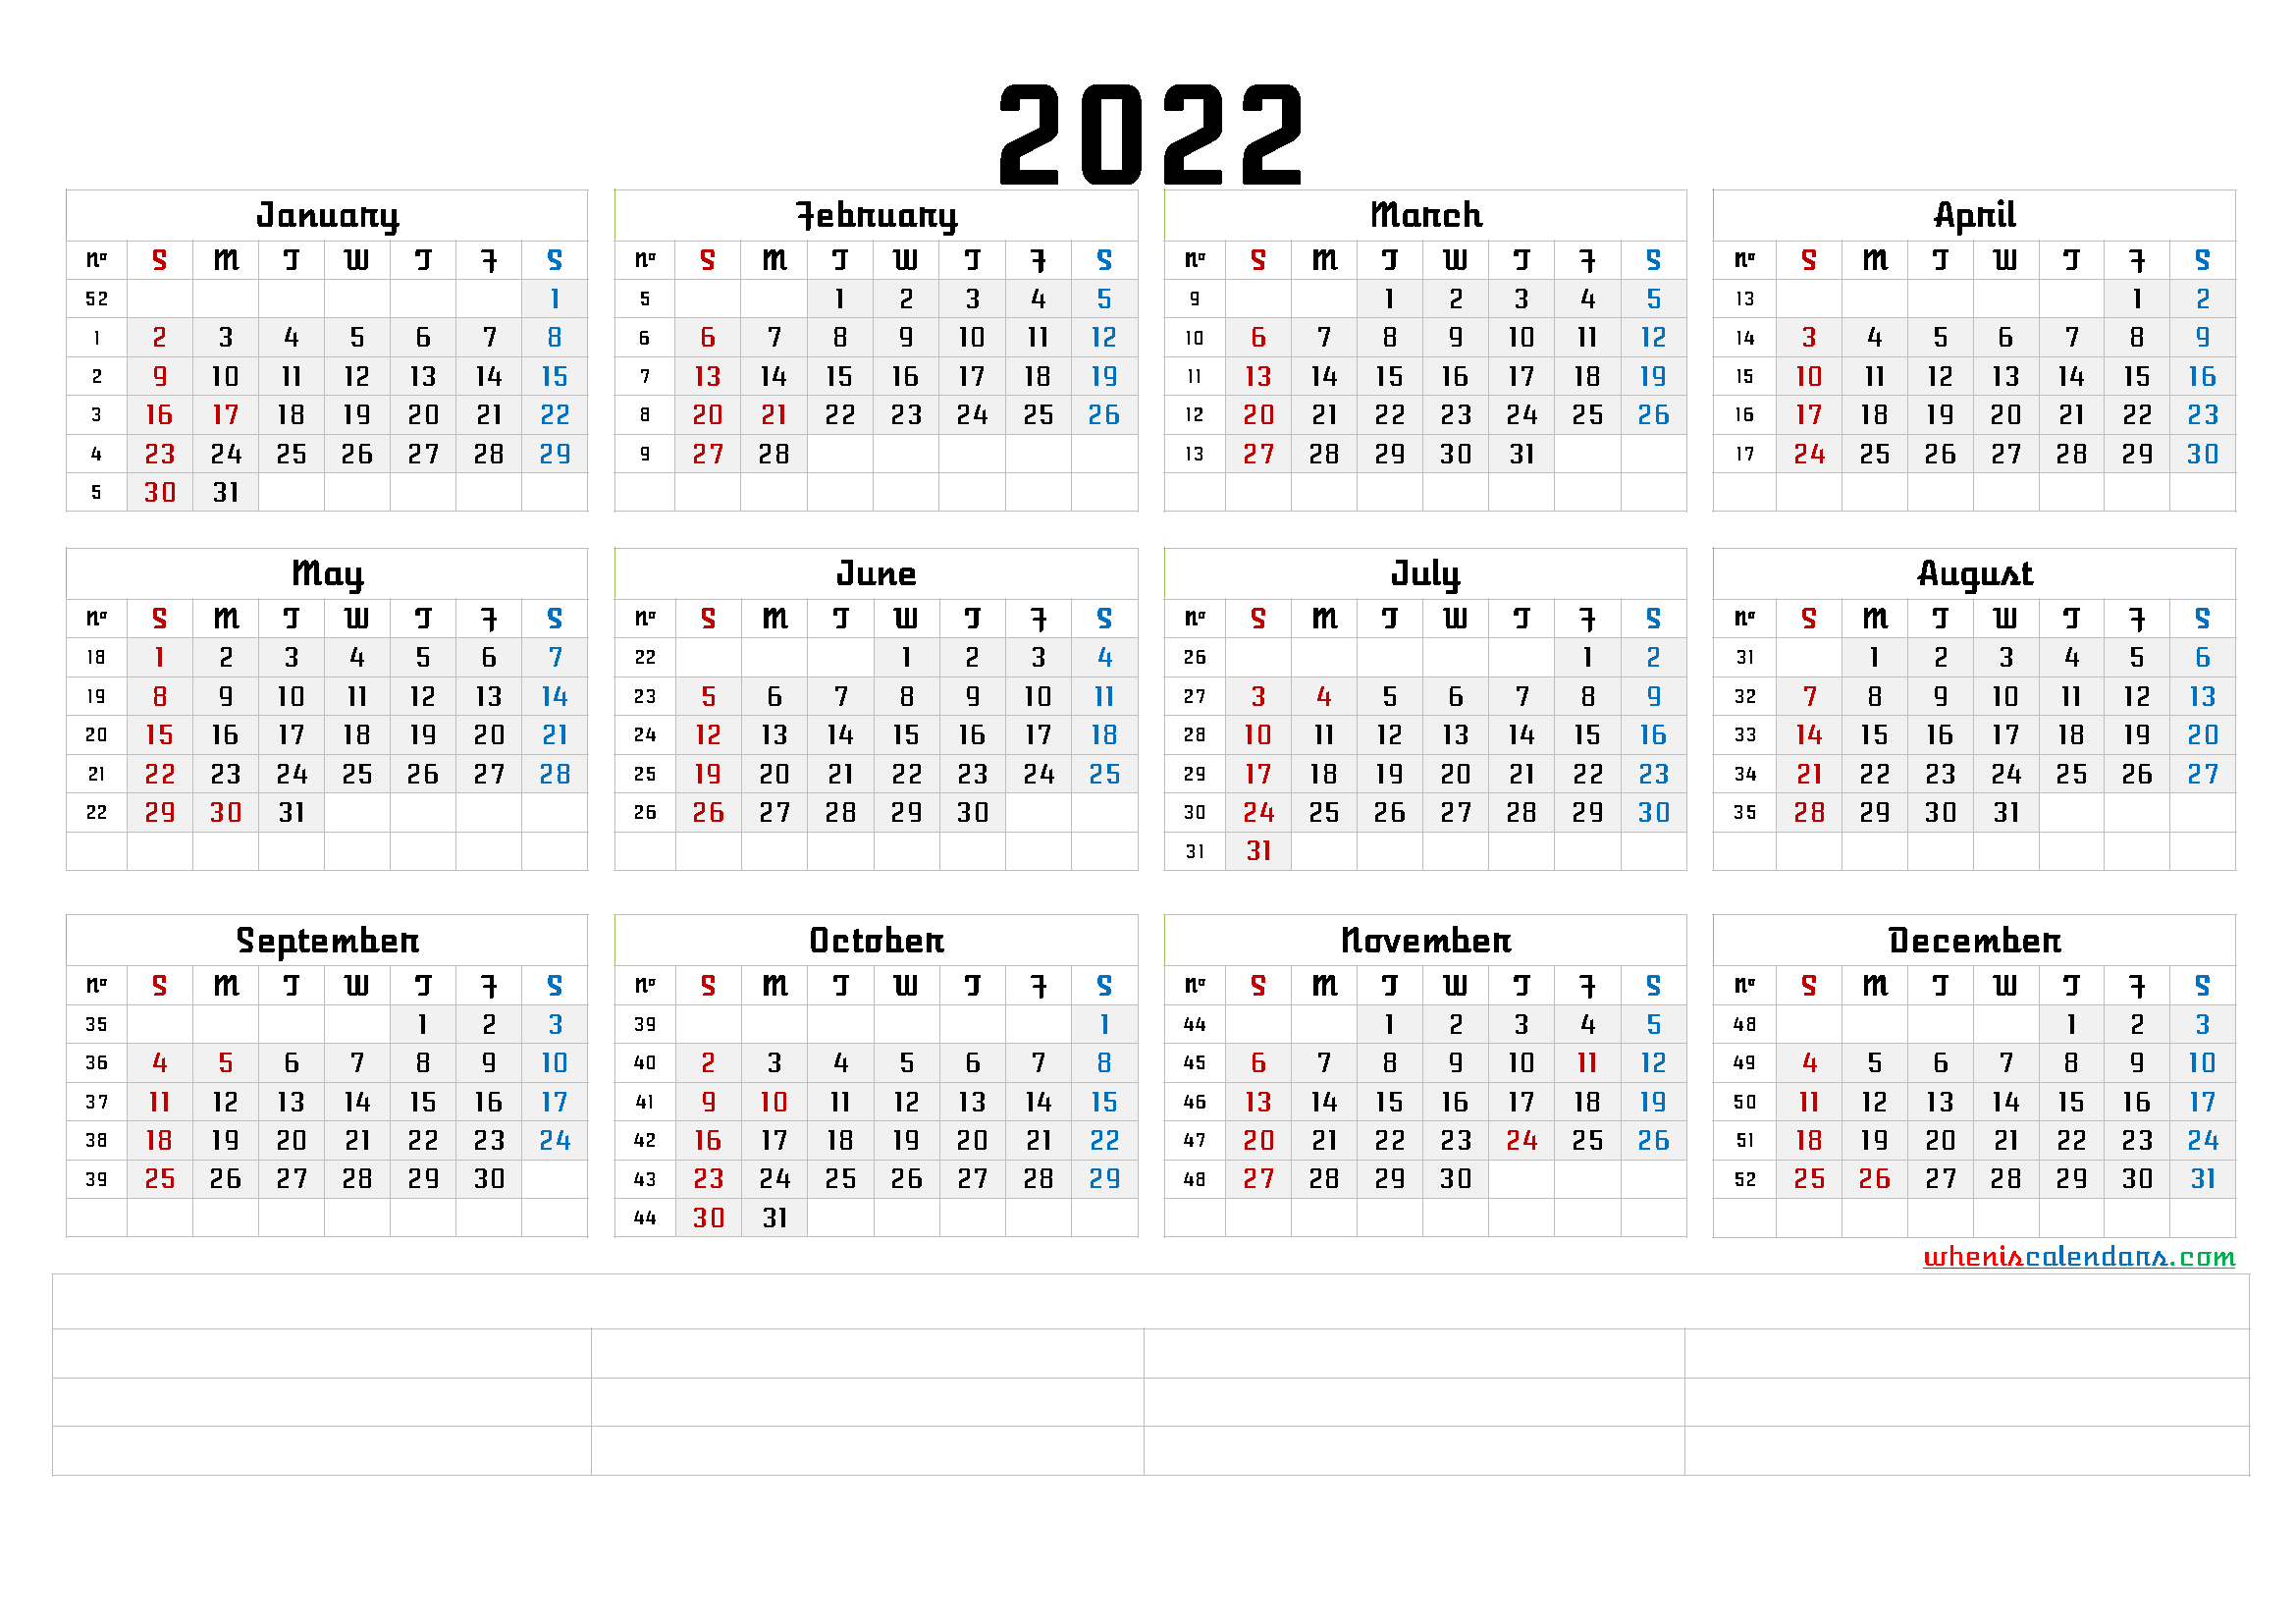 2022 Yearly Calendar Template Word  Calendraex in Next Year Calendar 2022